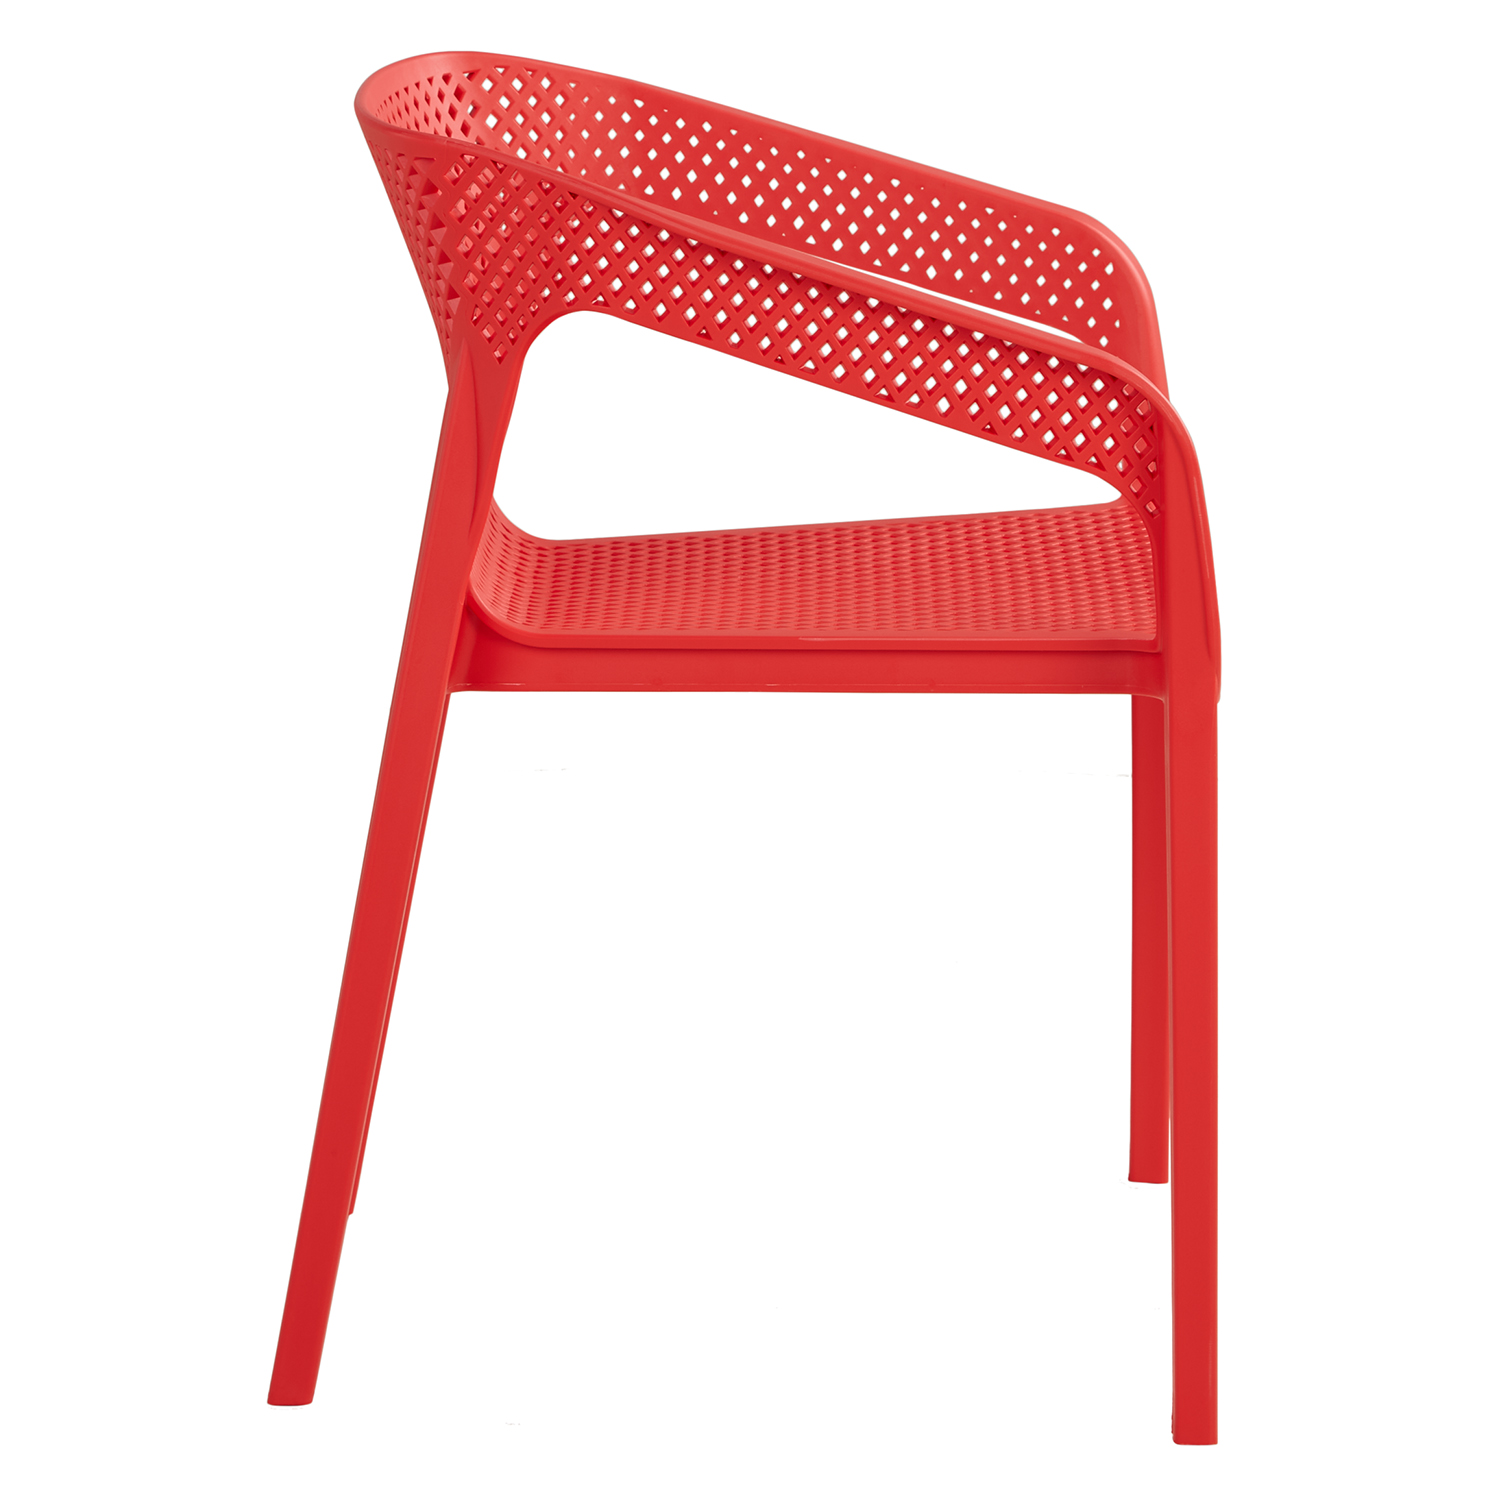 Gartenstuhl mit Armlehnen 6er Set Gartensessel Rot Stühle Kunststoff Stapelstühle Balkonstuhl Outdoor-Stuhl